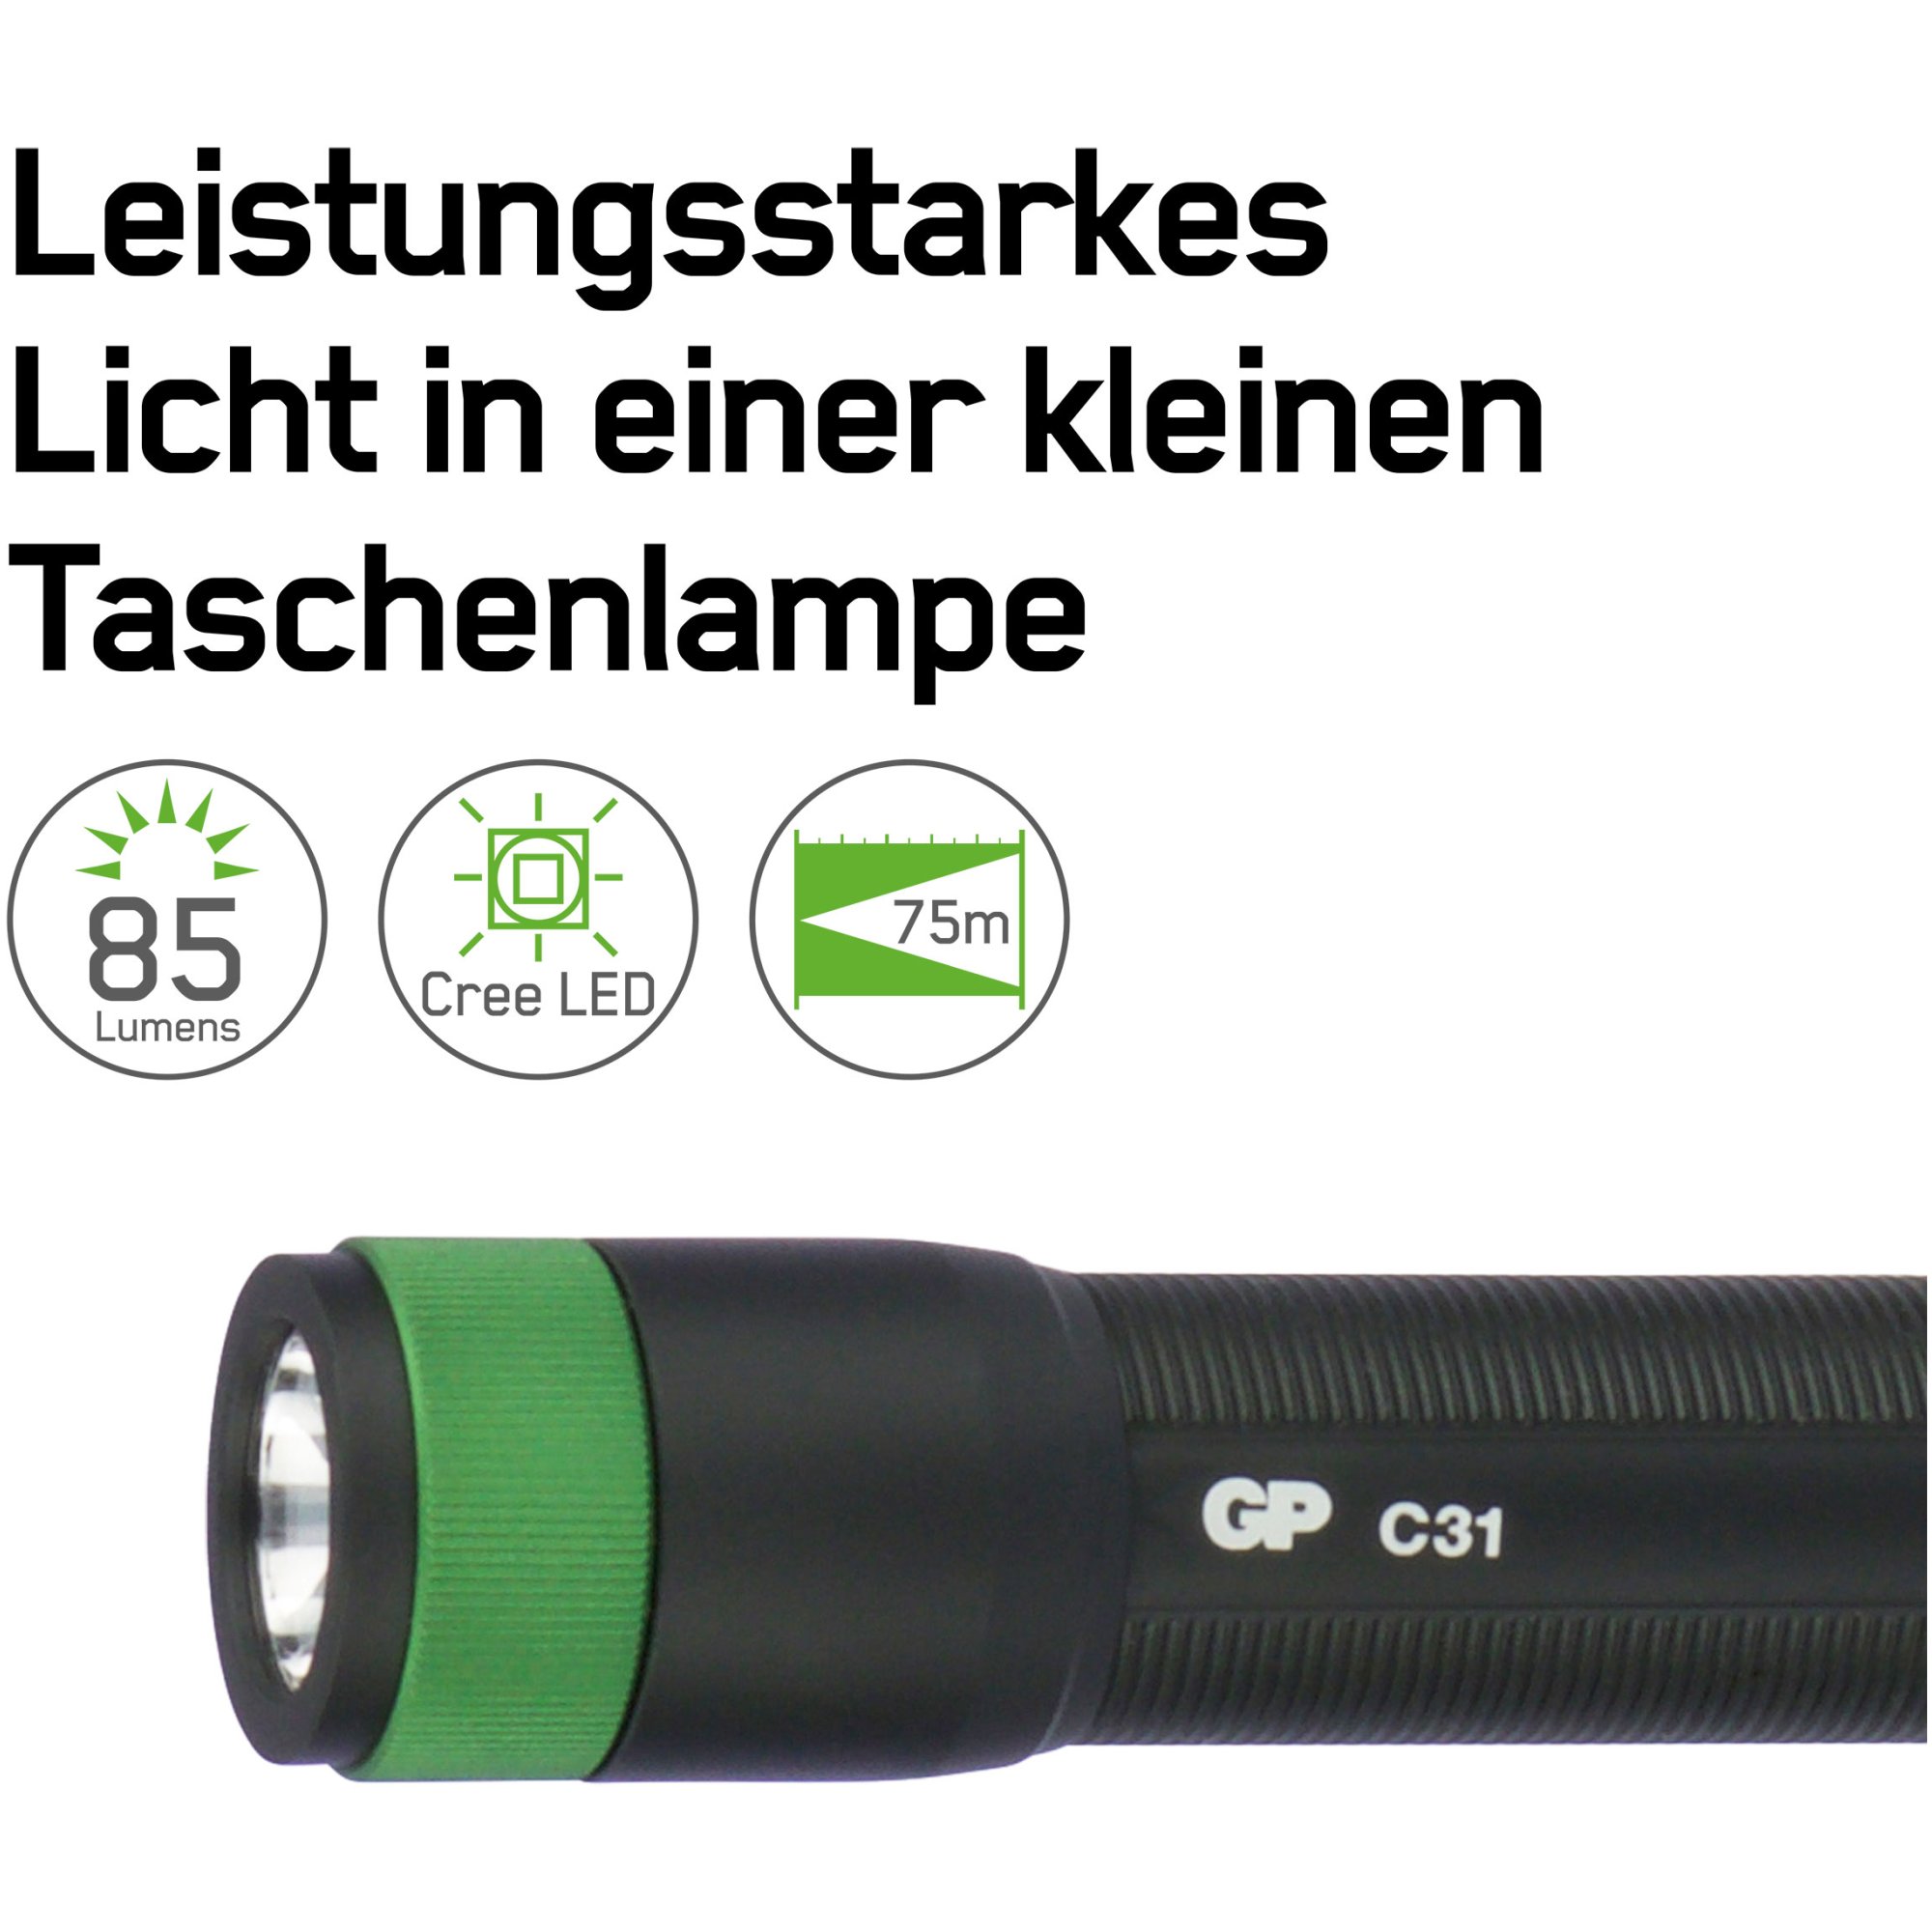 Taschenlampe GP C31 85lumen inkl. 1x AA 1,5V Batterie